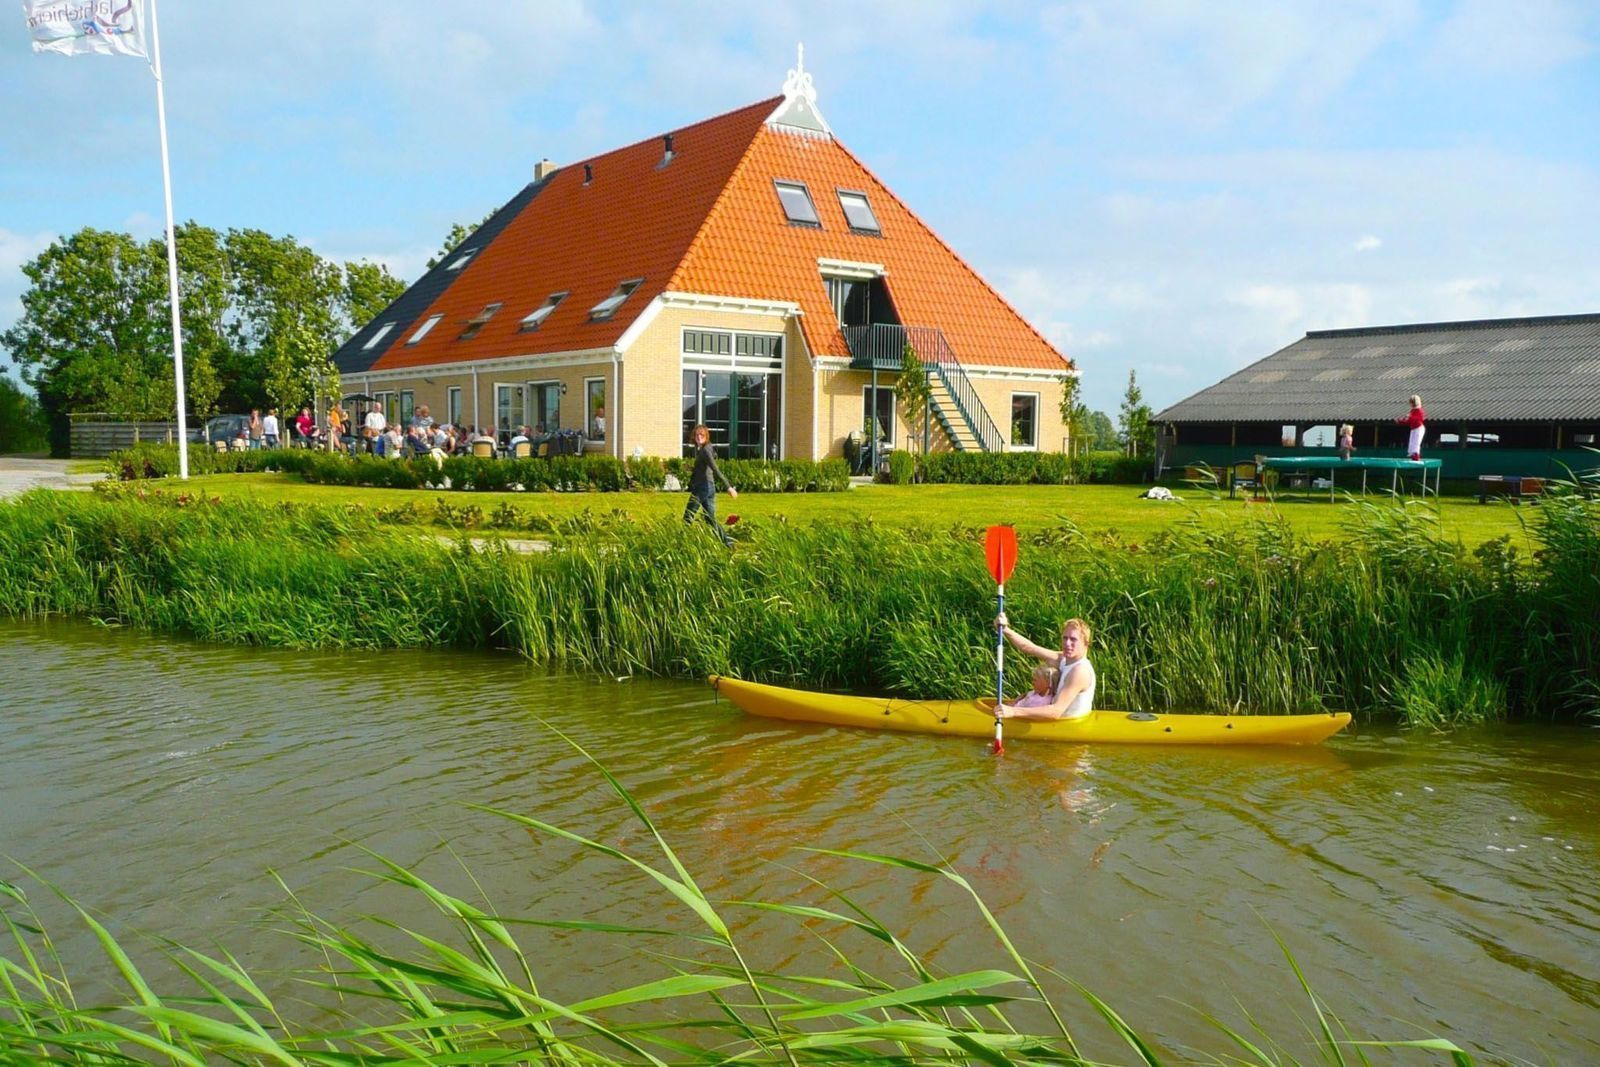 Vakantiehuis NL-FR-0030 16-personen in Lollum Nederland